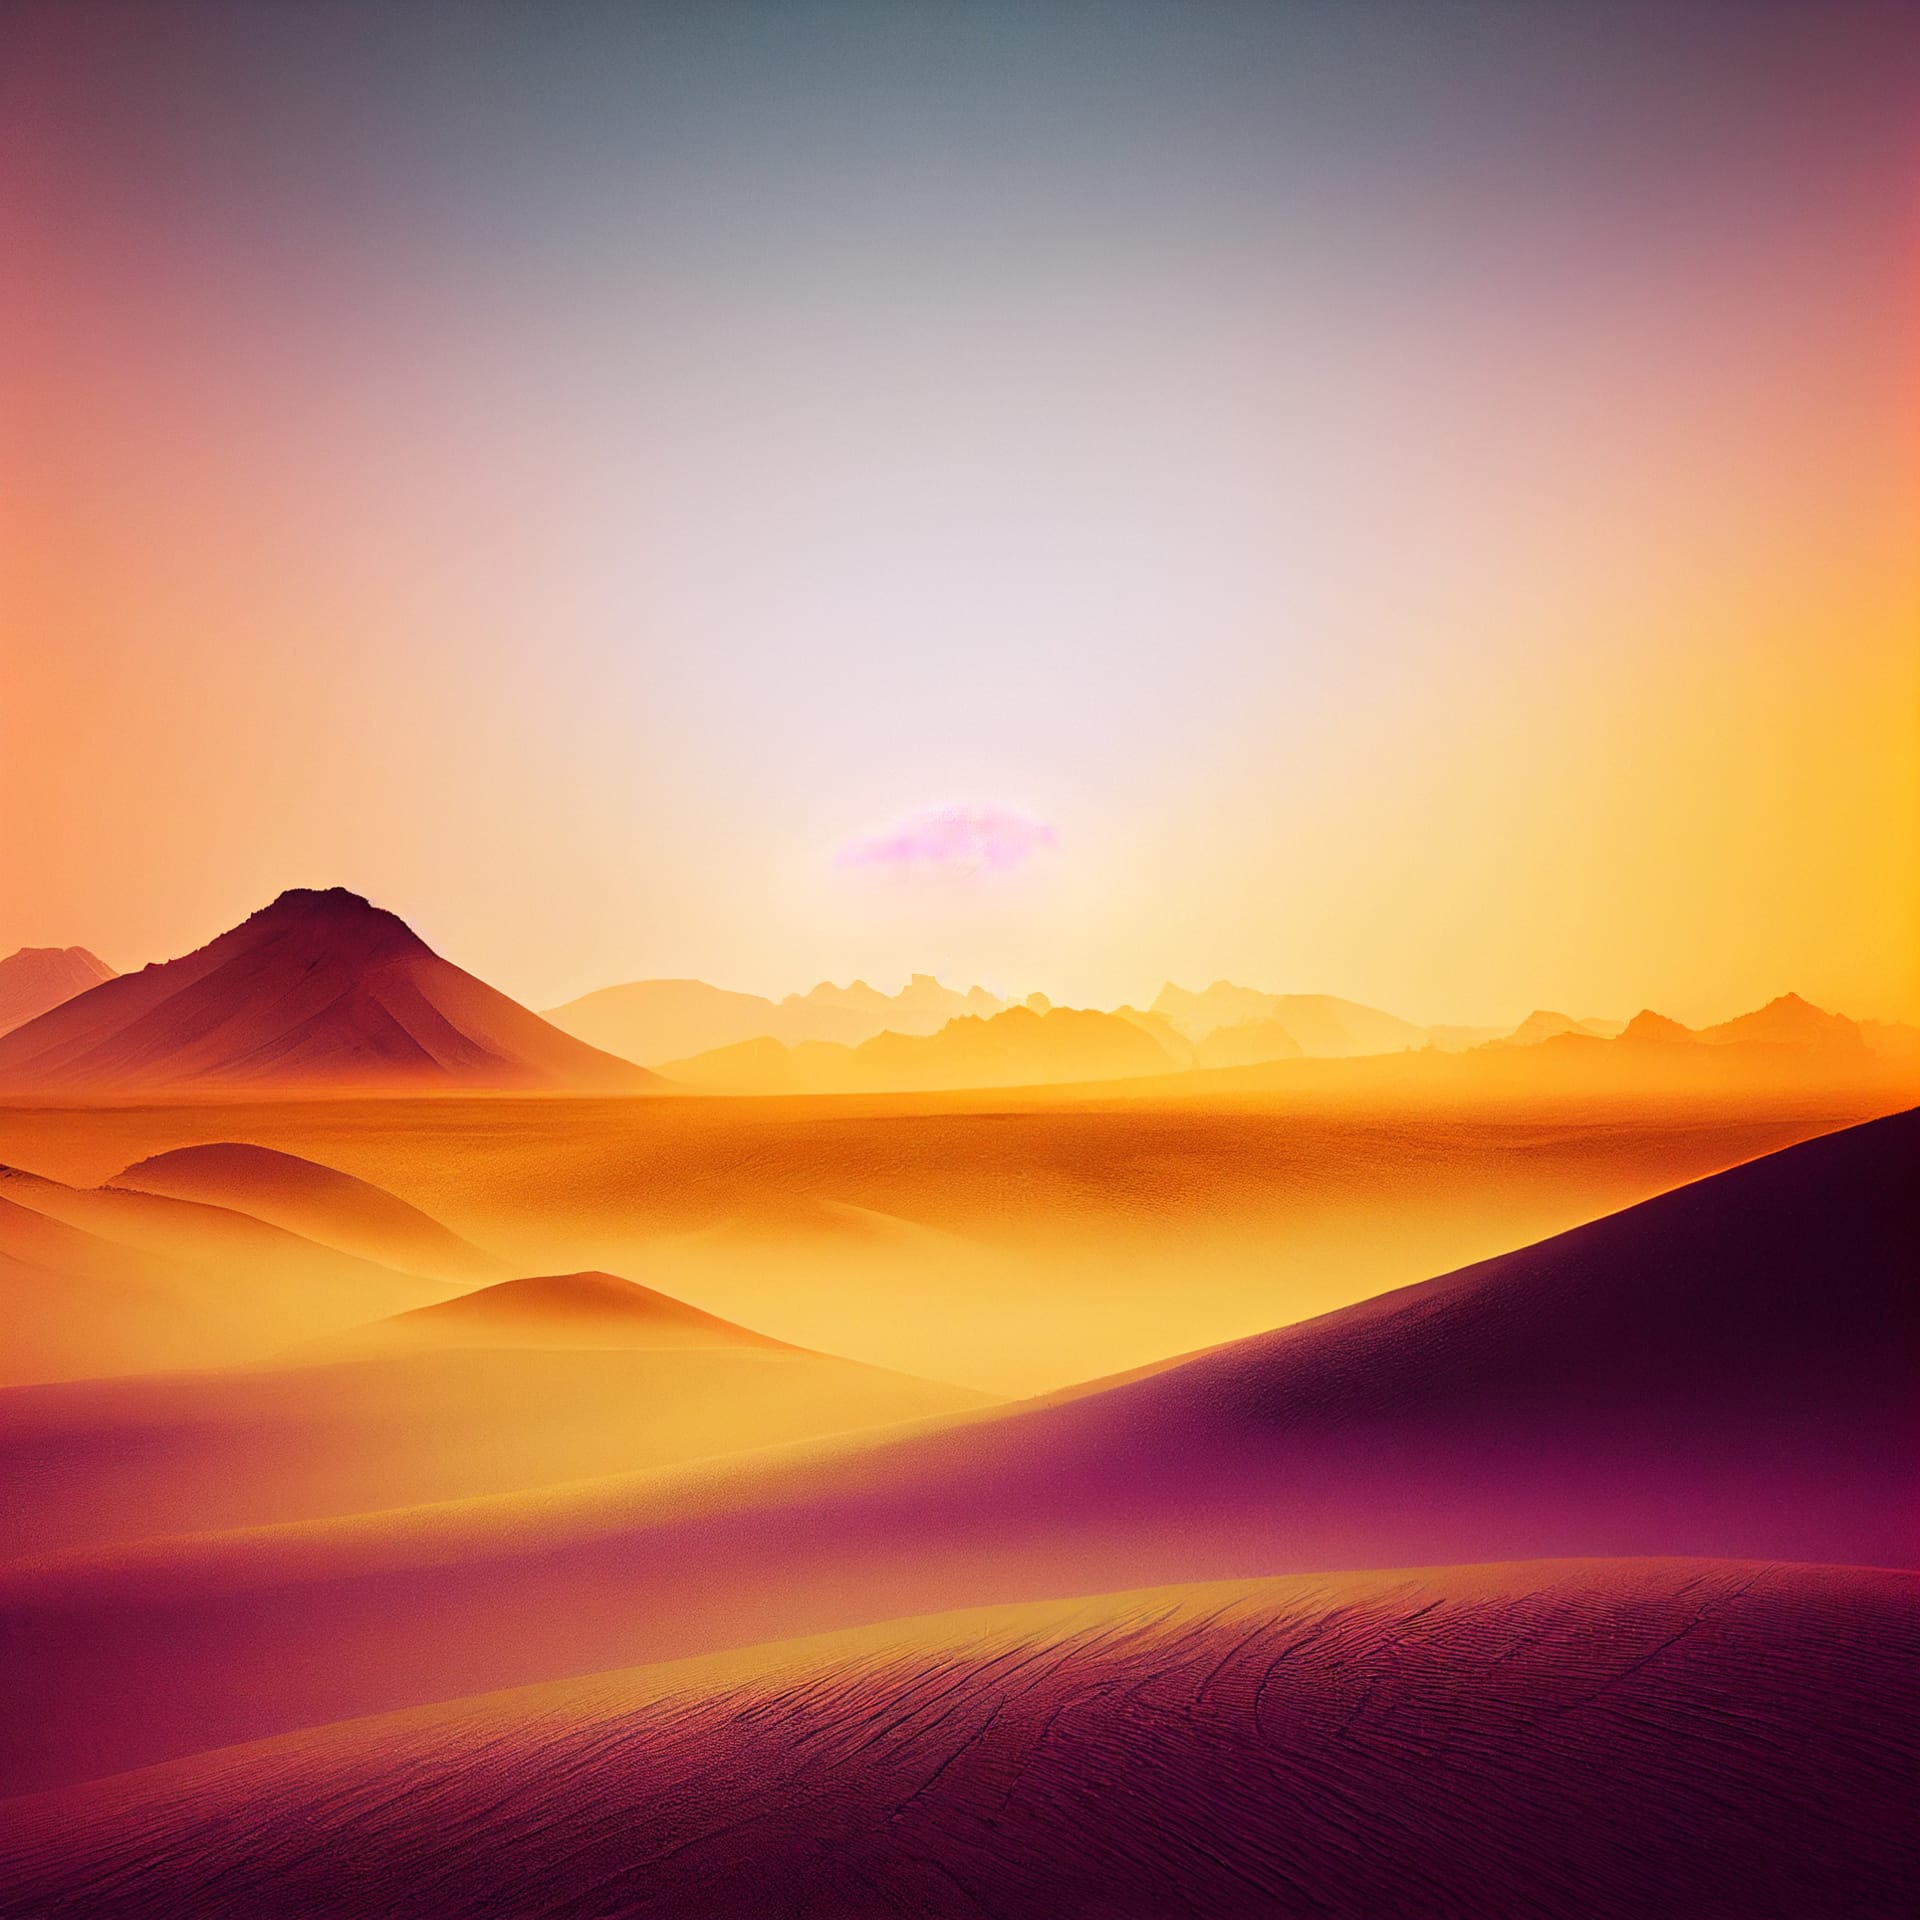 Beautiful desert landscape sunset sunrise image nature clipart